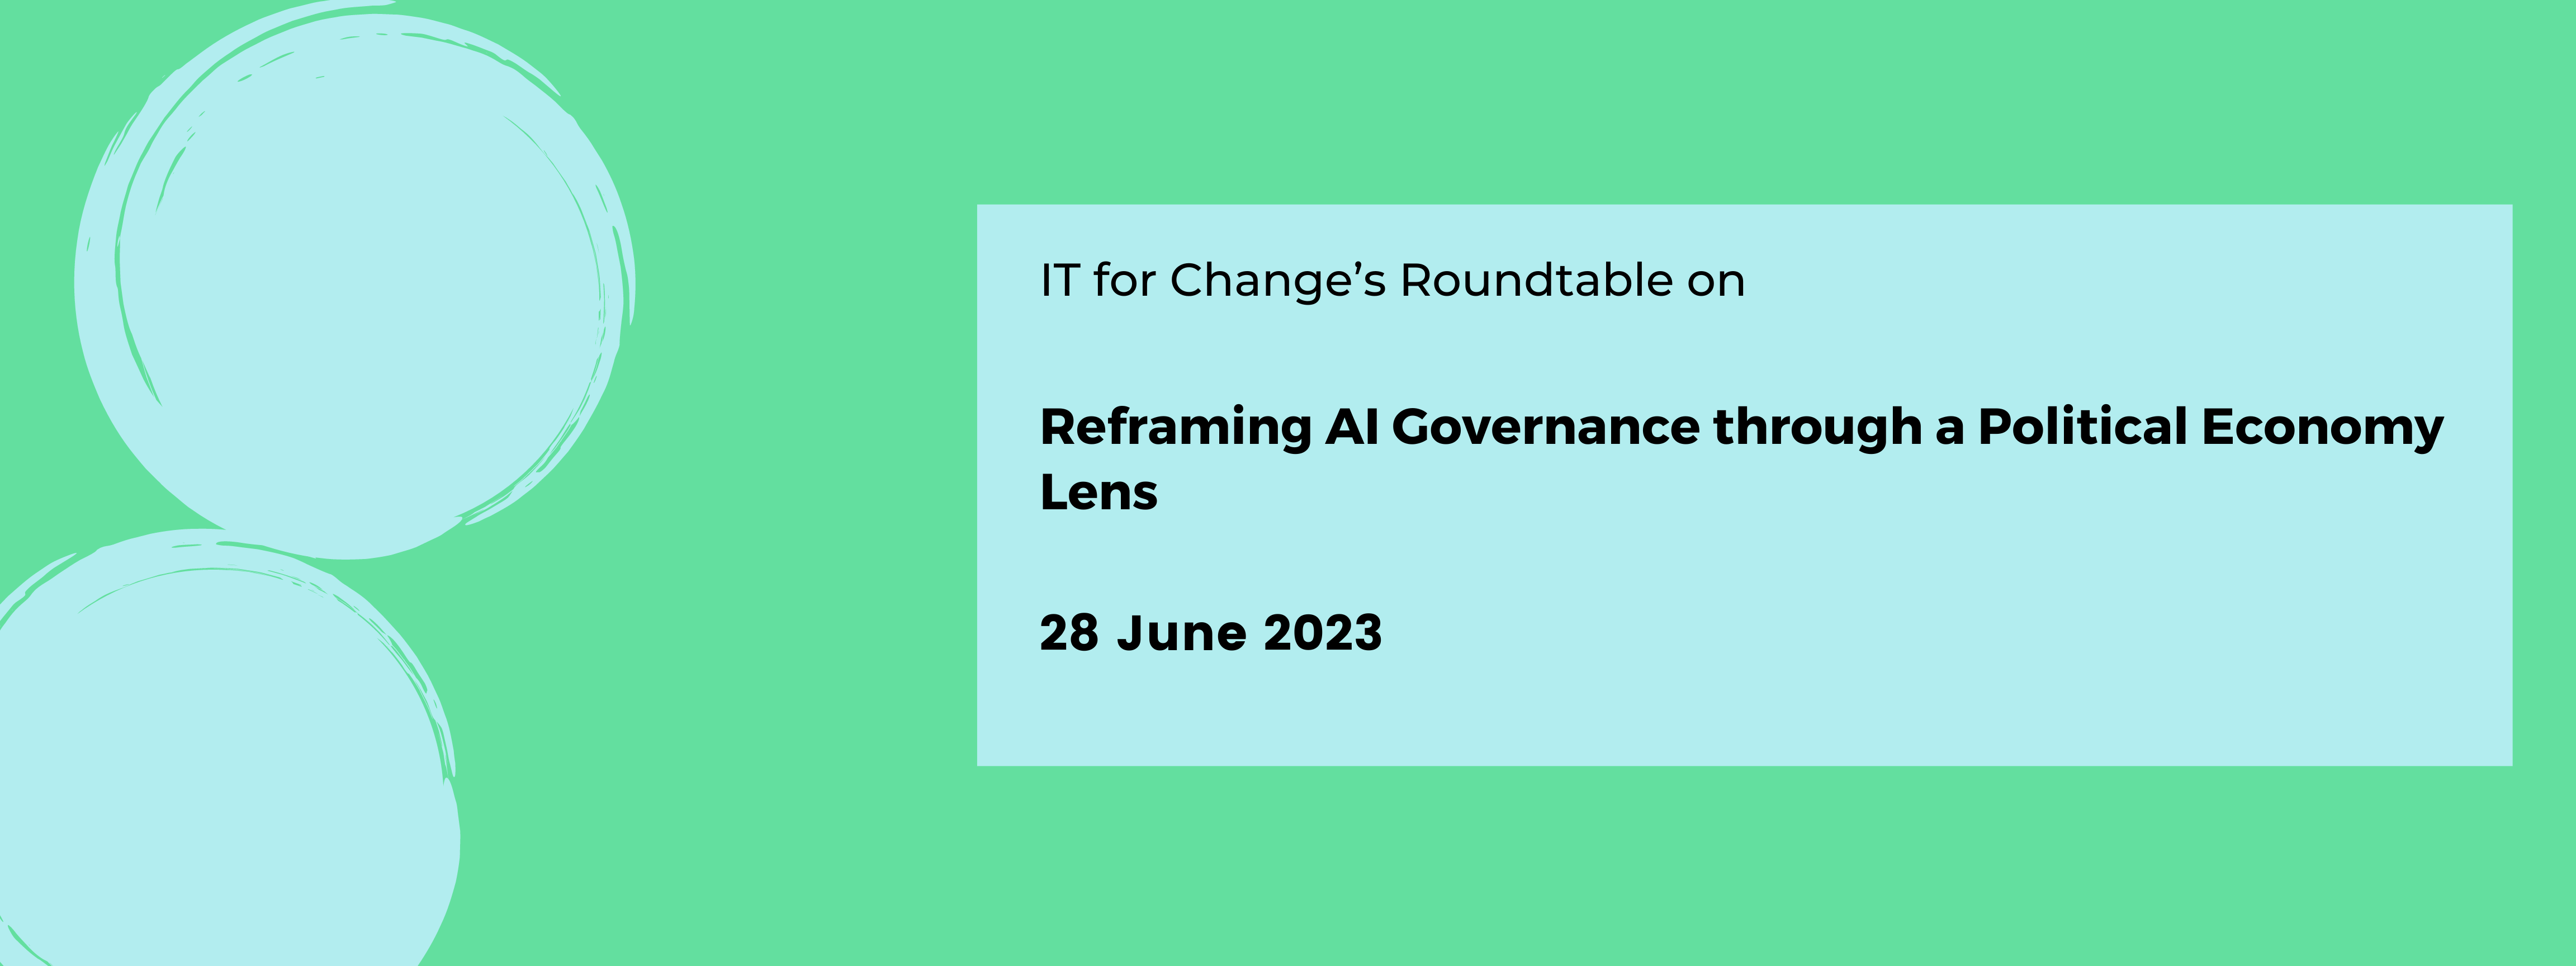 Roundtable on Reframing AI Governance through a Political Economy Lens